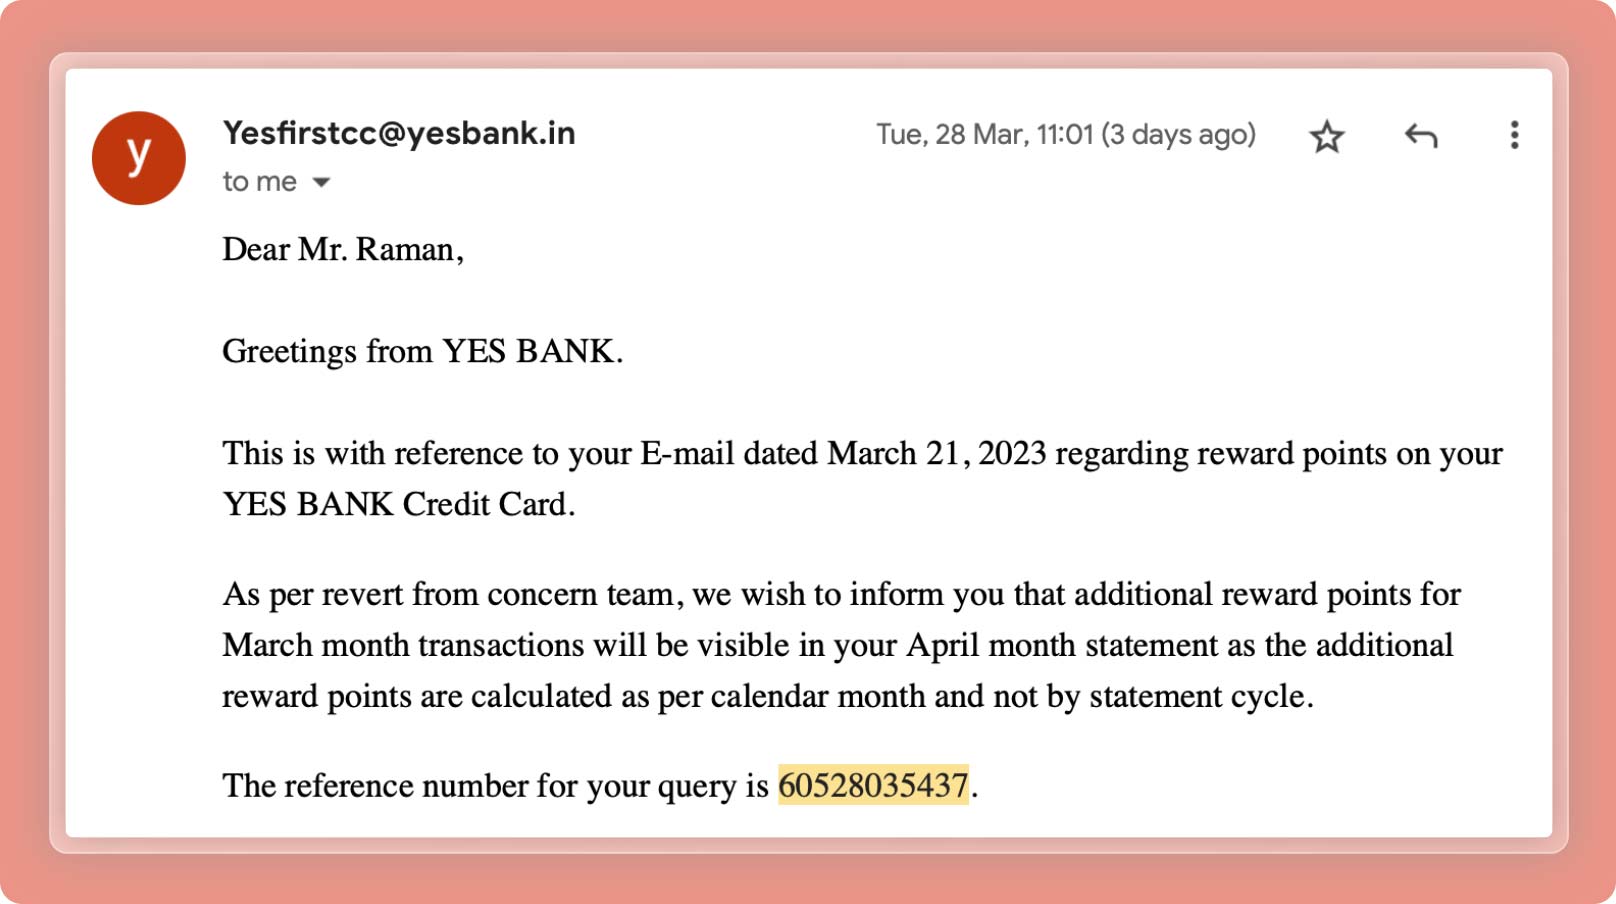 Yesbank credit card bonus points offer fulfilment